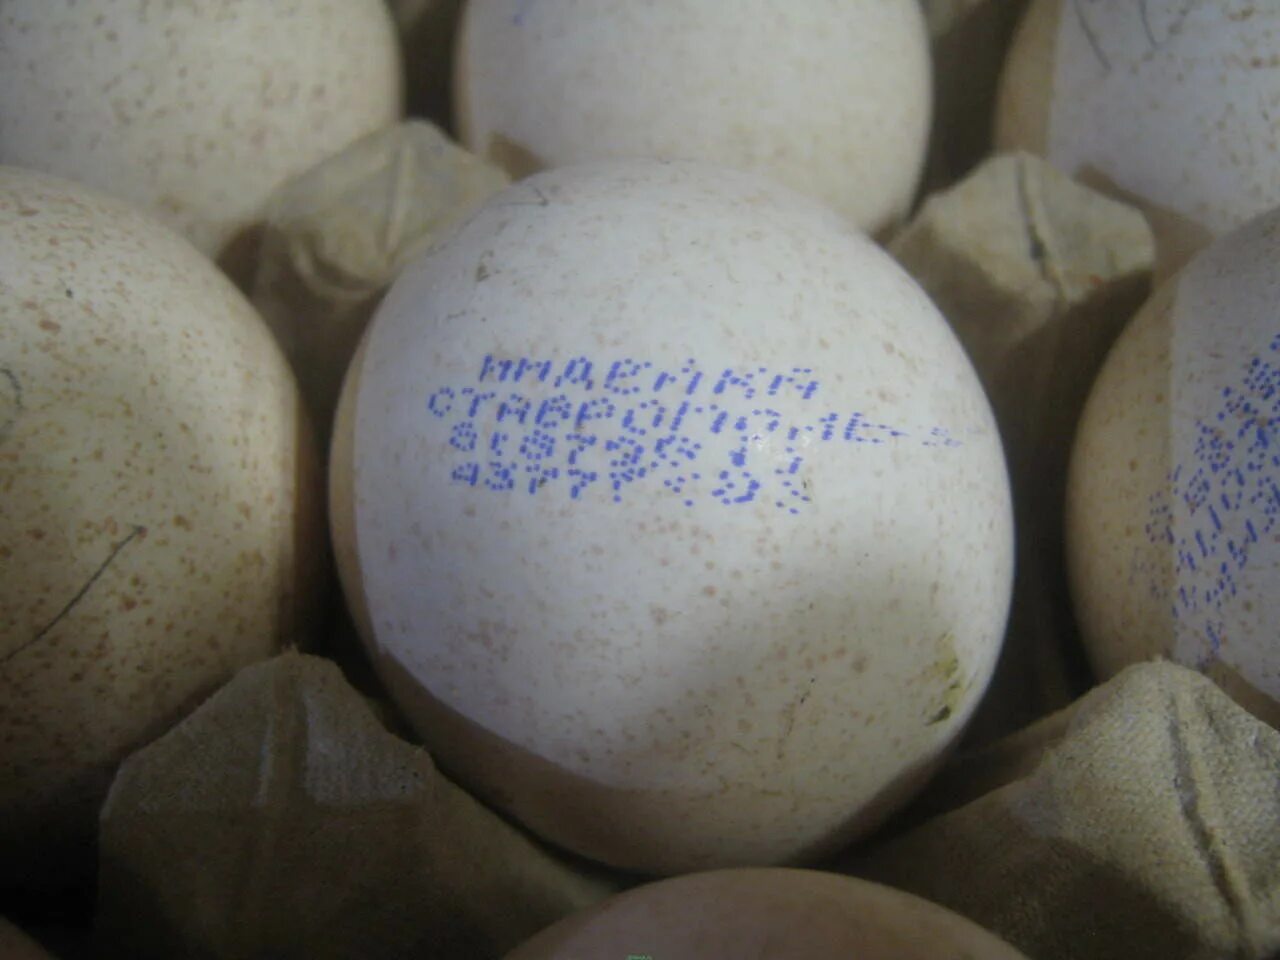 Печати на инкубационных яйцах индейки. Яйцо Биг 6 штамп. Маркировка инкубационного яйца индейки. Печать на инкубационном яйце индюшки.